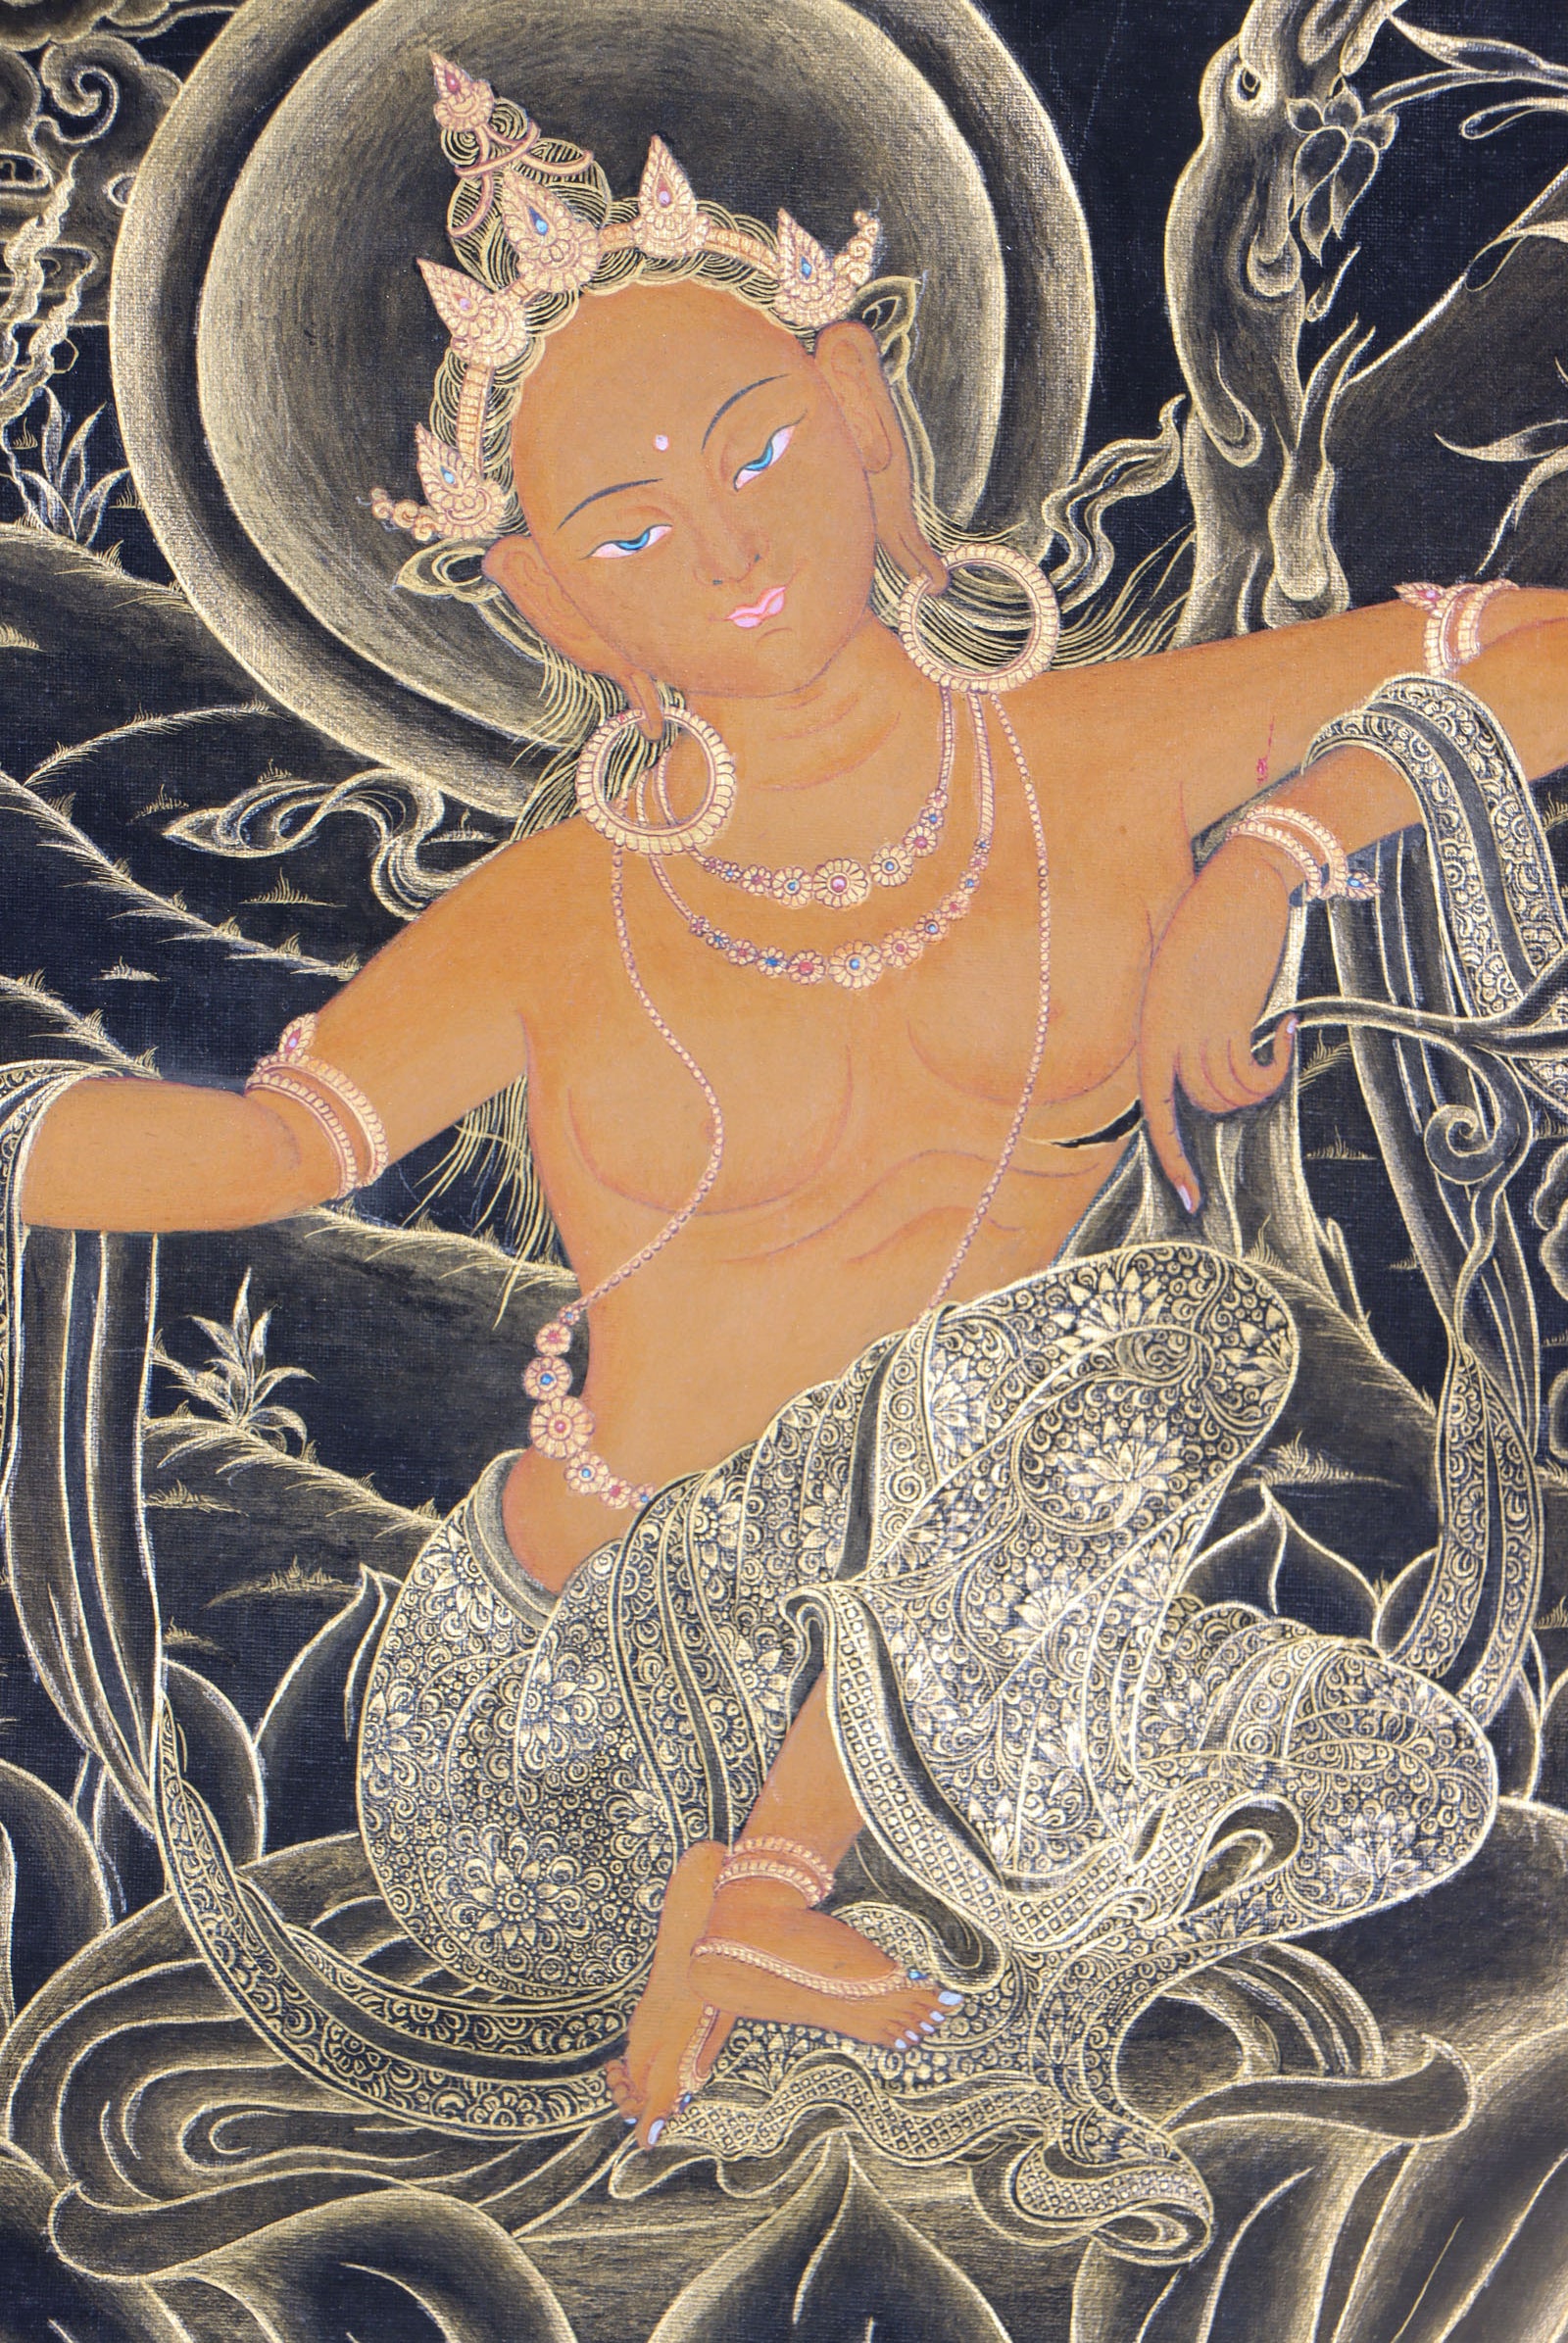 Manjushri Thangka Painting for meditation and spiritual practice.